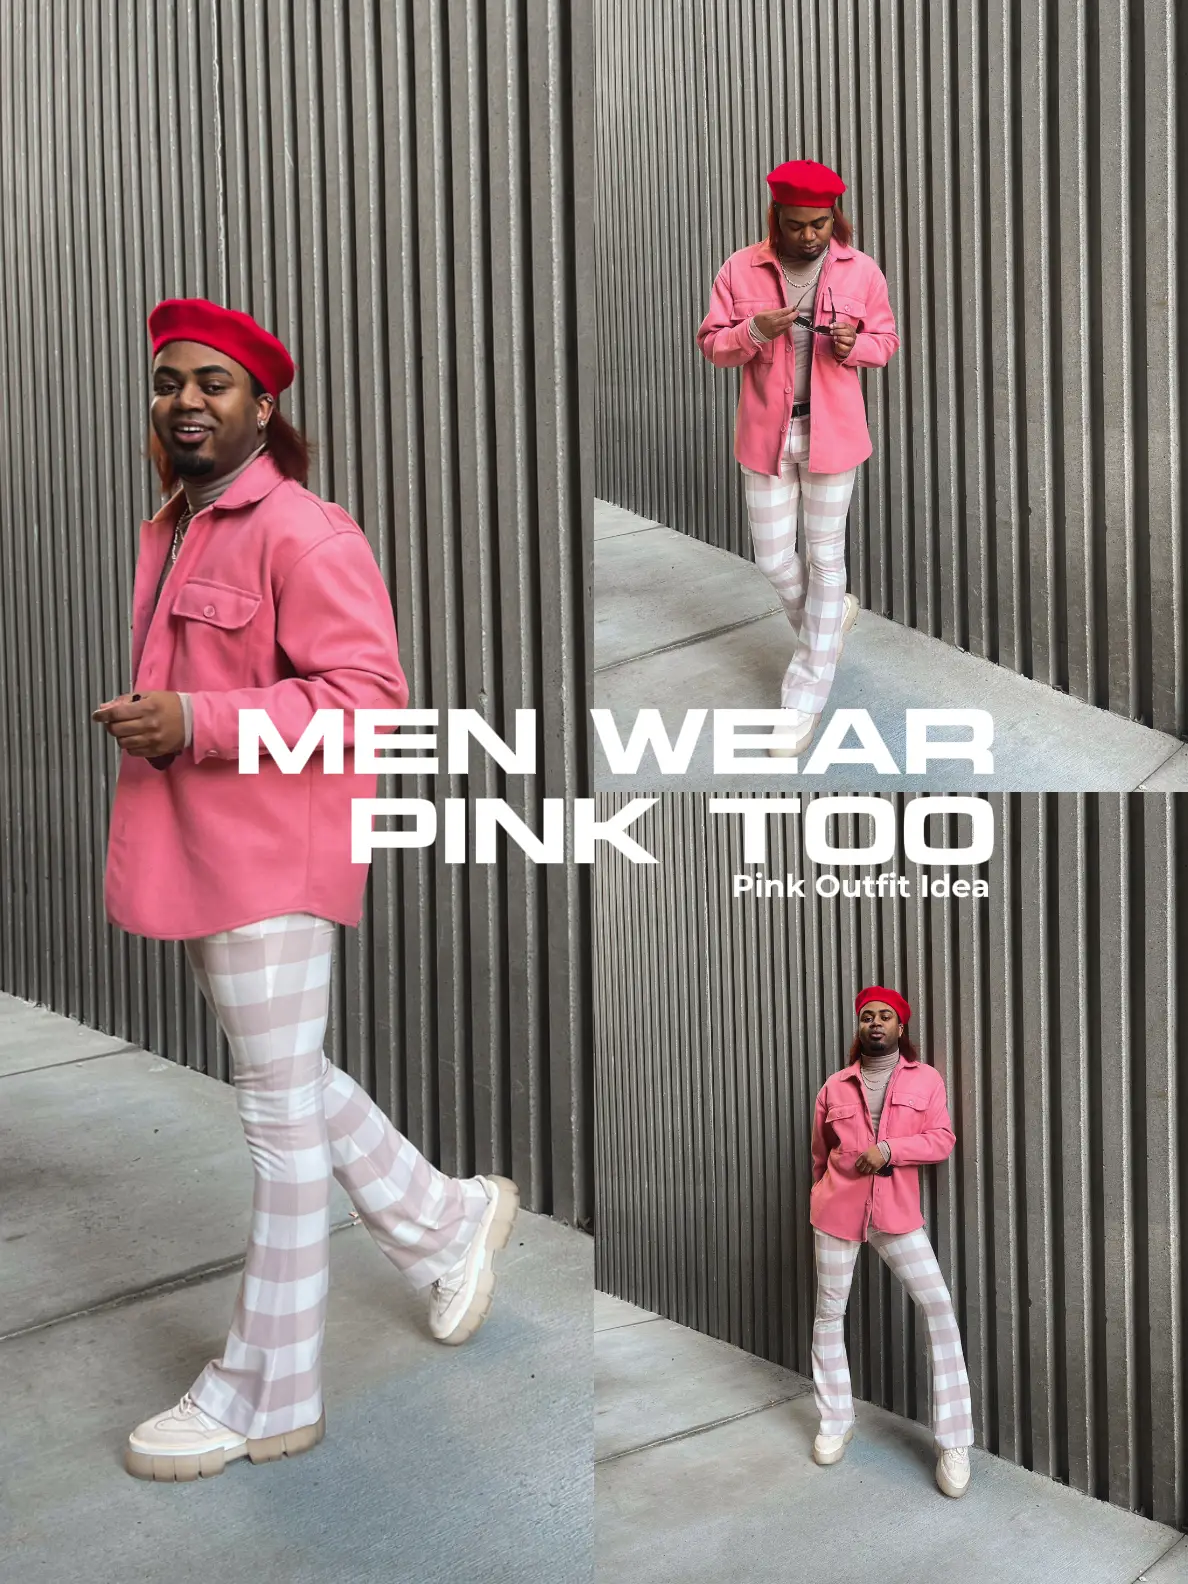 Guys wear pink too